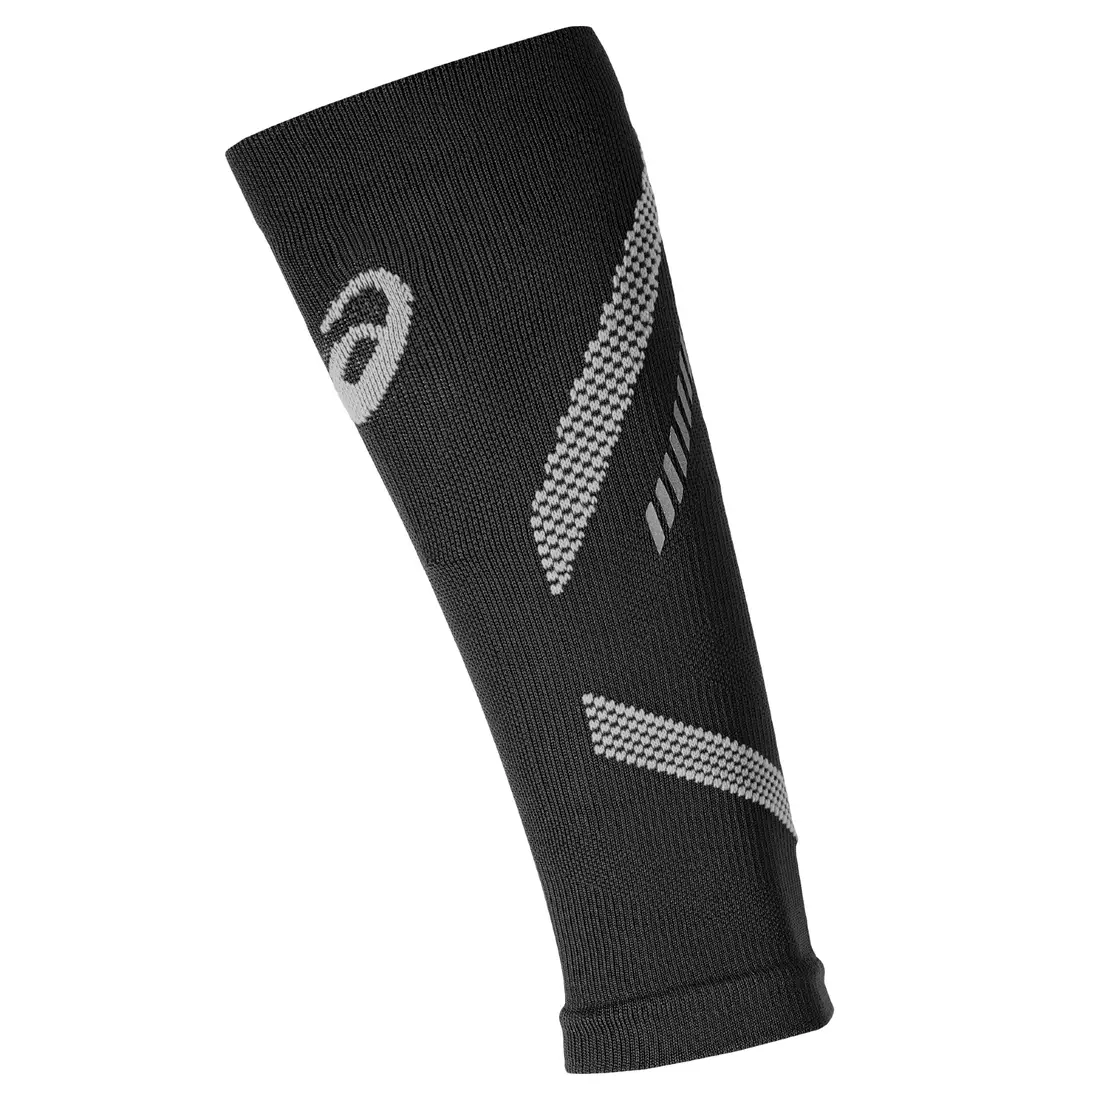 ASICS 144022-0904 COMPRESSION CALF SLEEVE - calf compression sleeves, color: Black